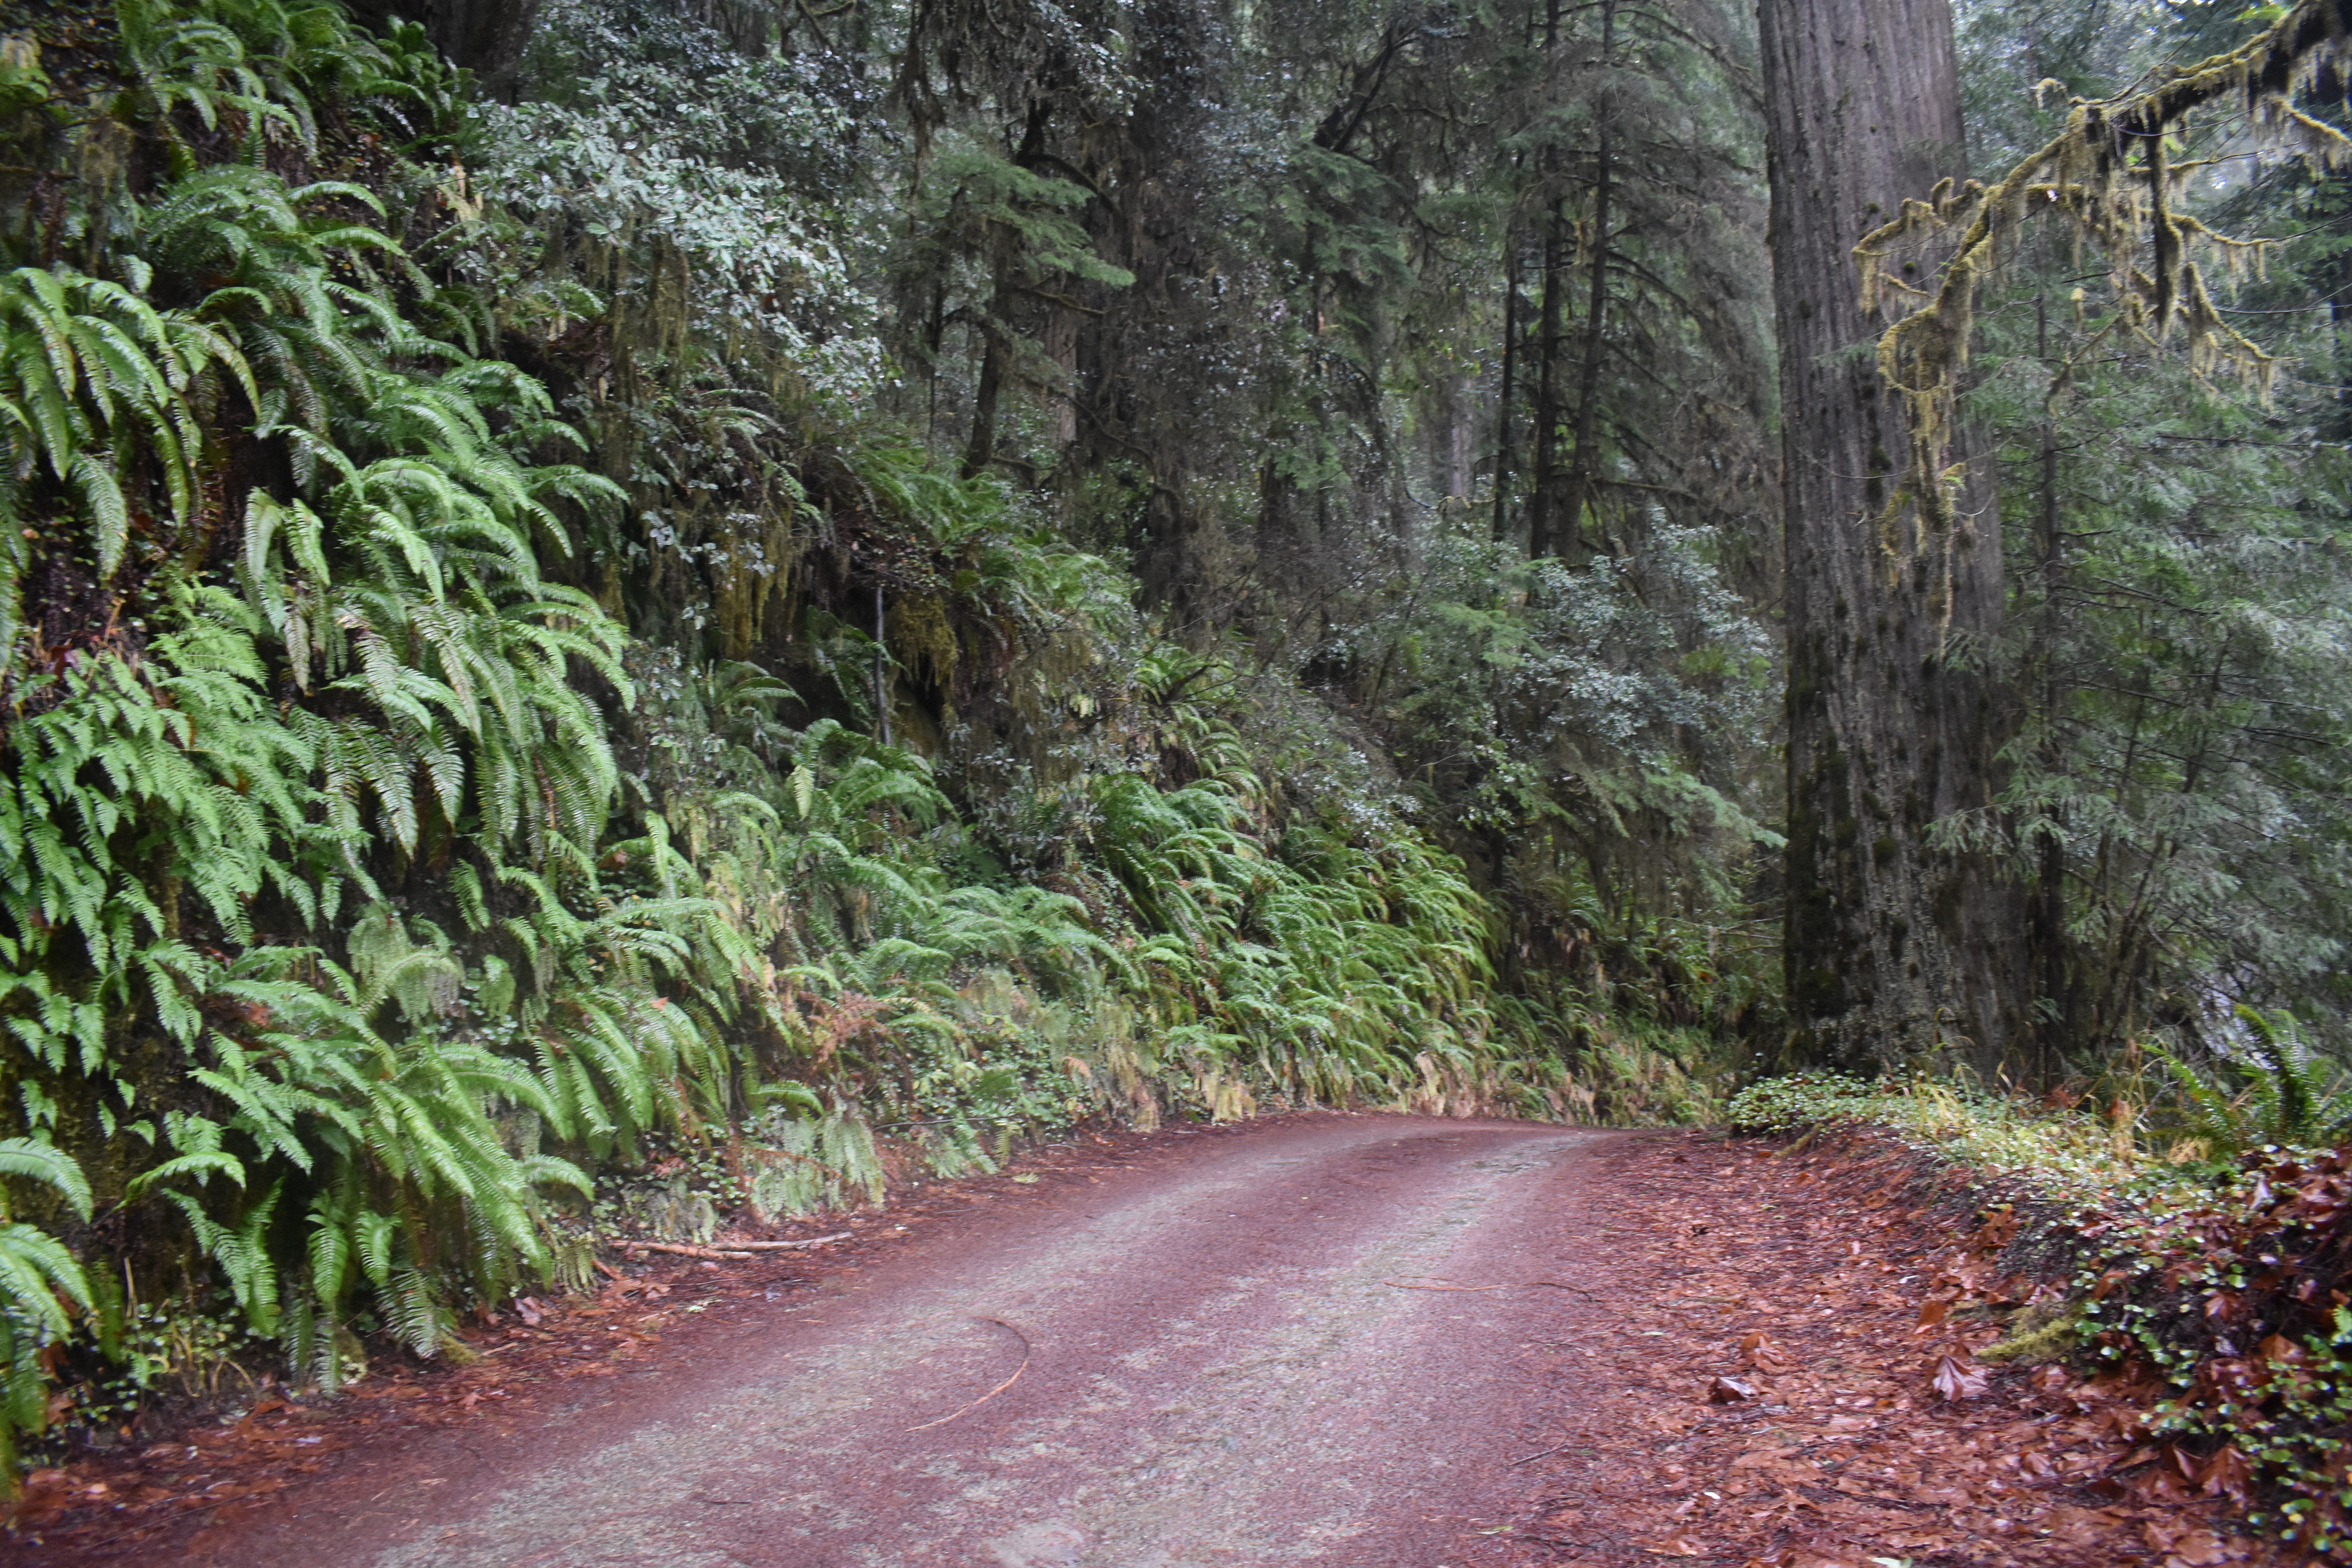 A dirt road between tall redwood trees.